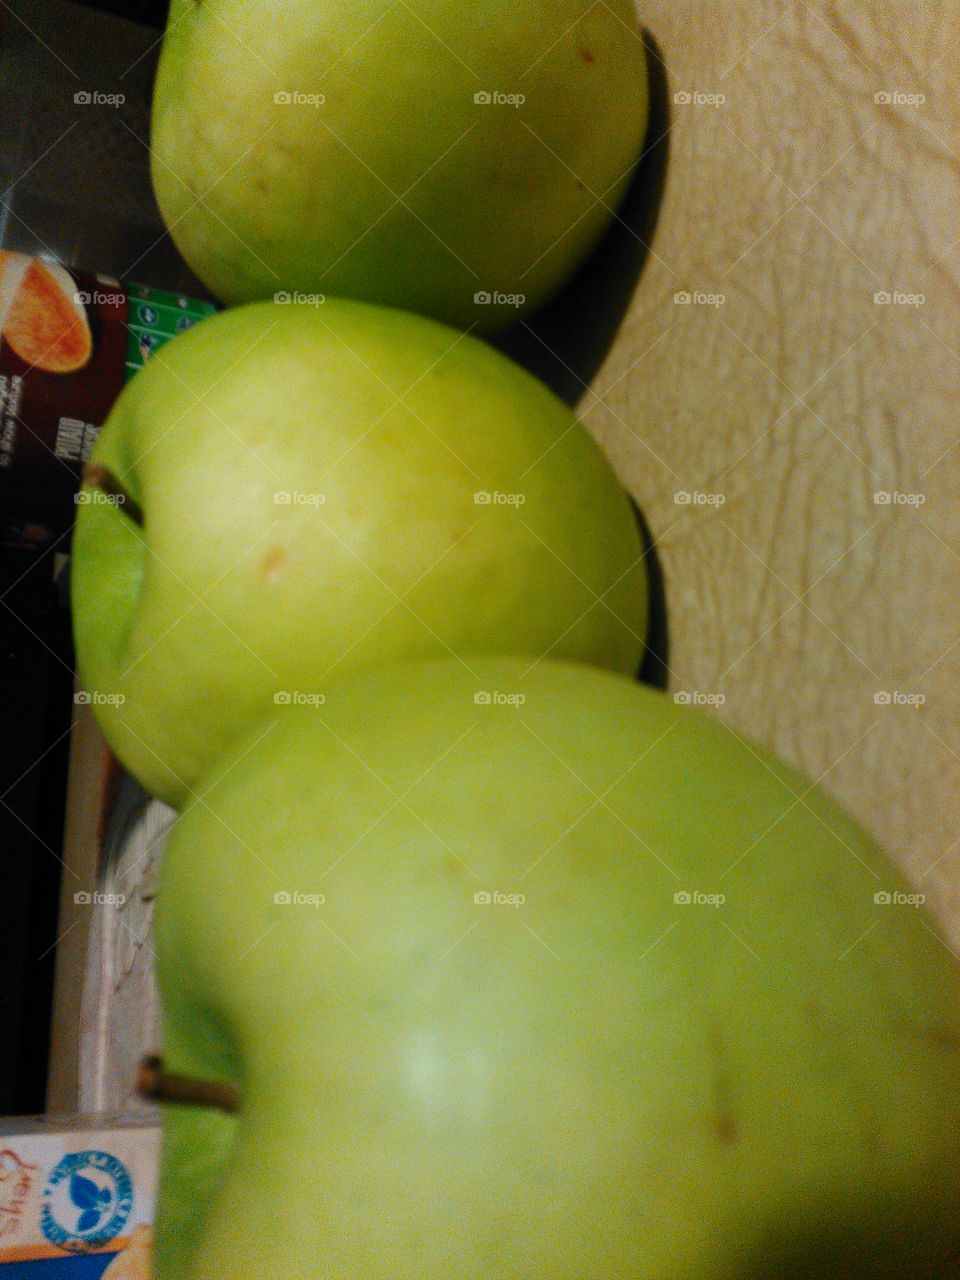 Apple. green apple